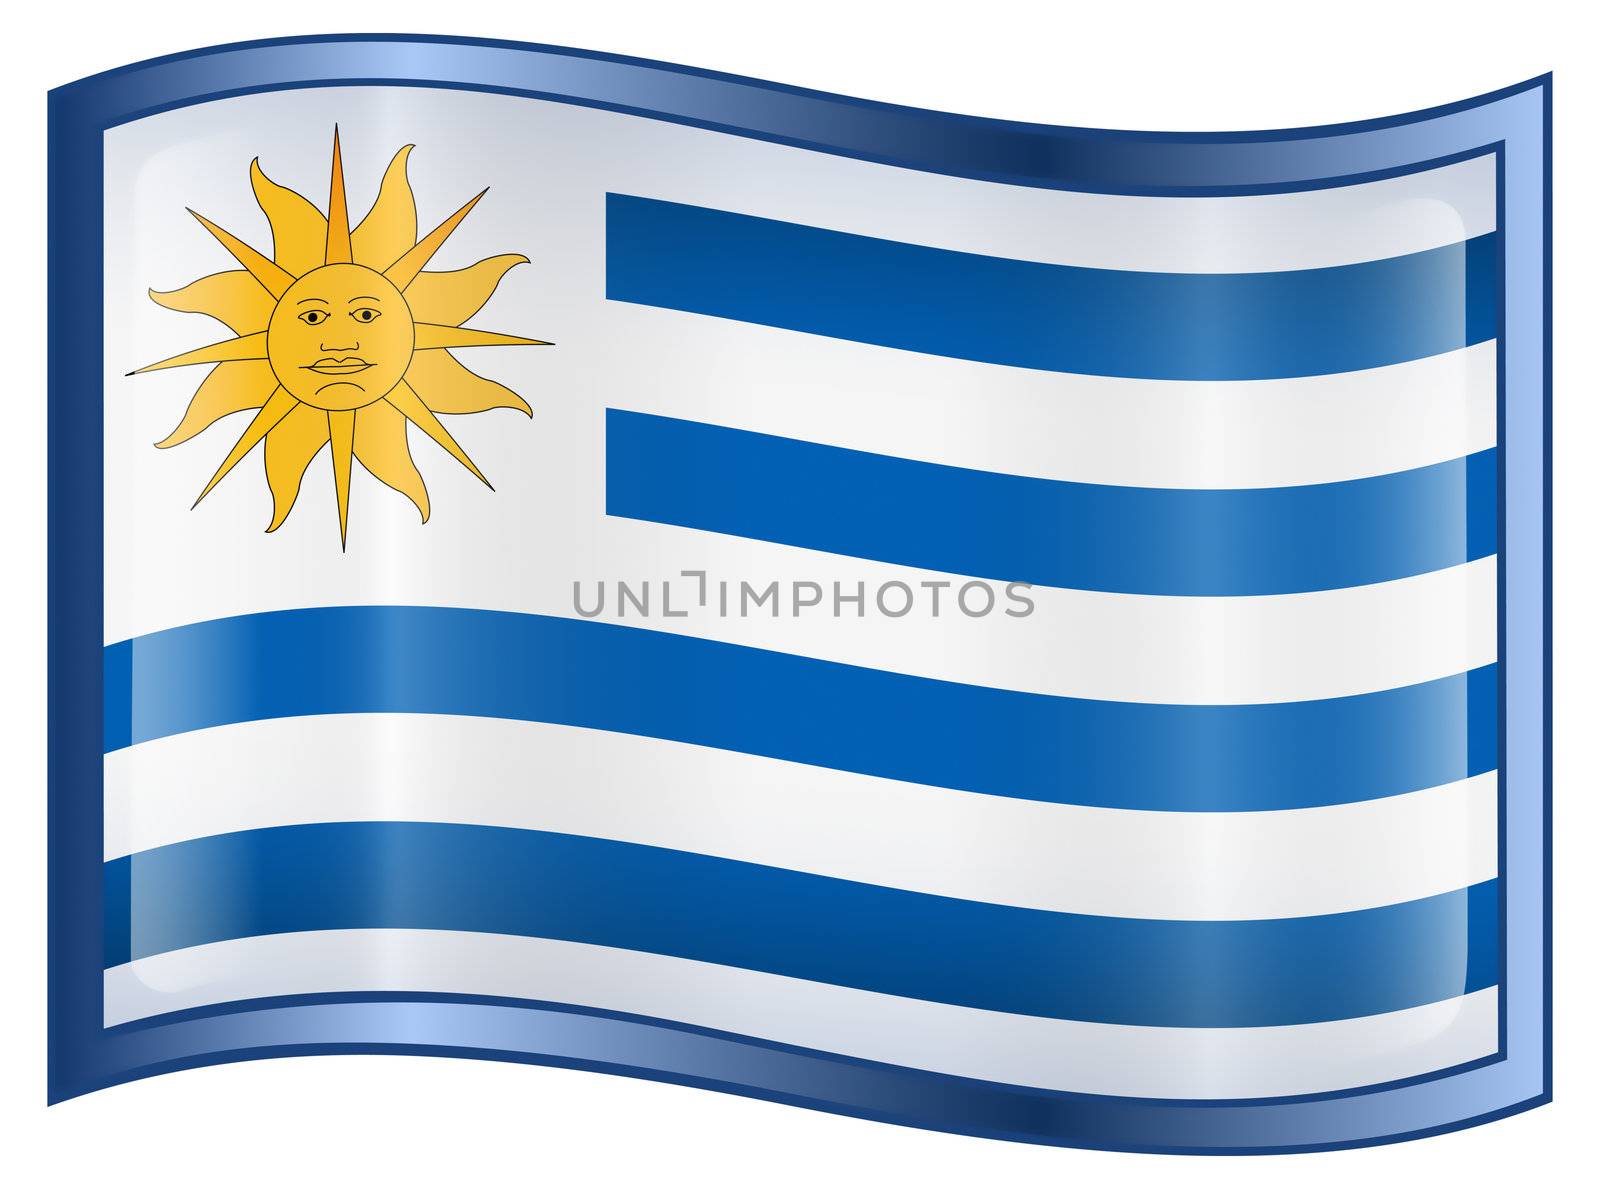 Uruguaian Flag icon. by zeffss